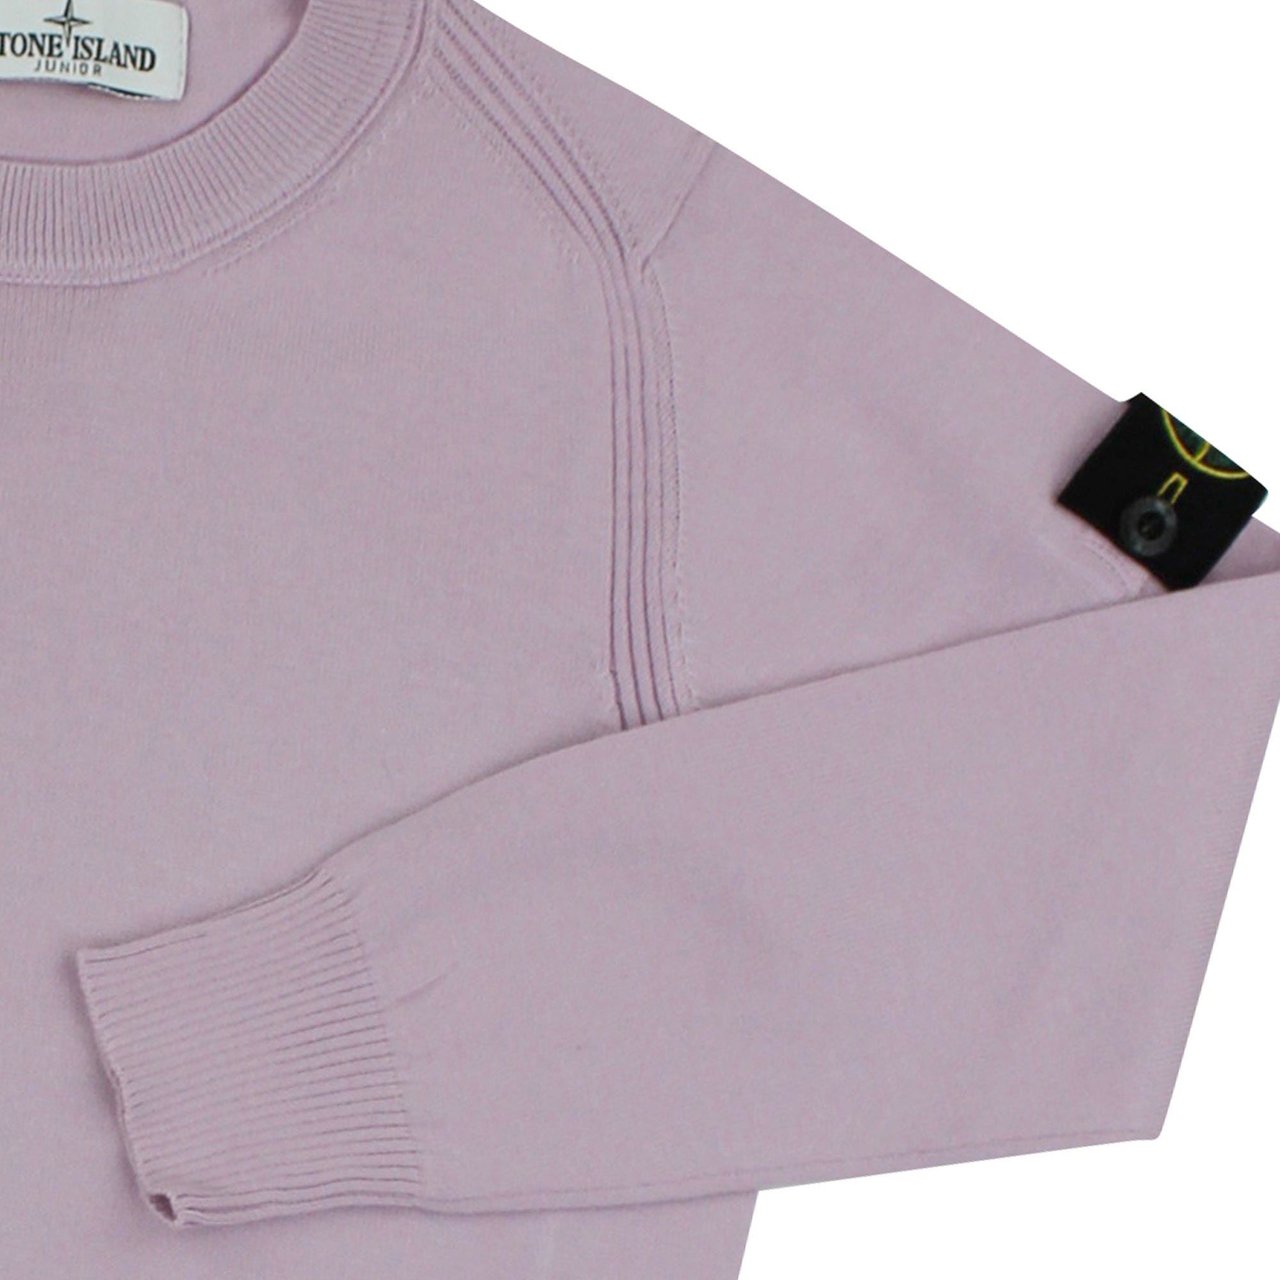 Stone Island Junior Pink Boy Sweater Roze